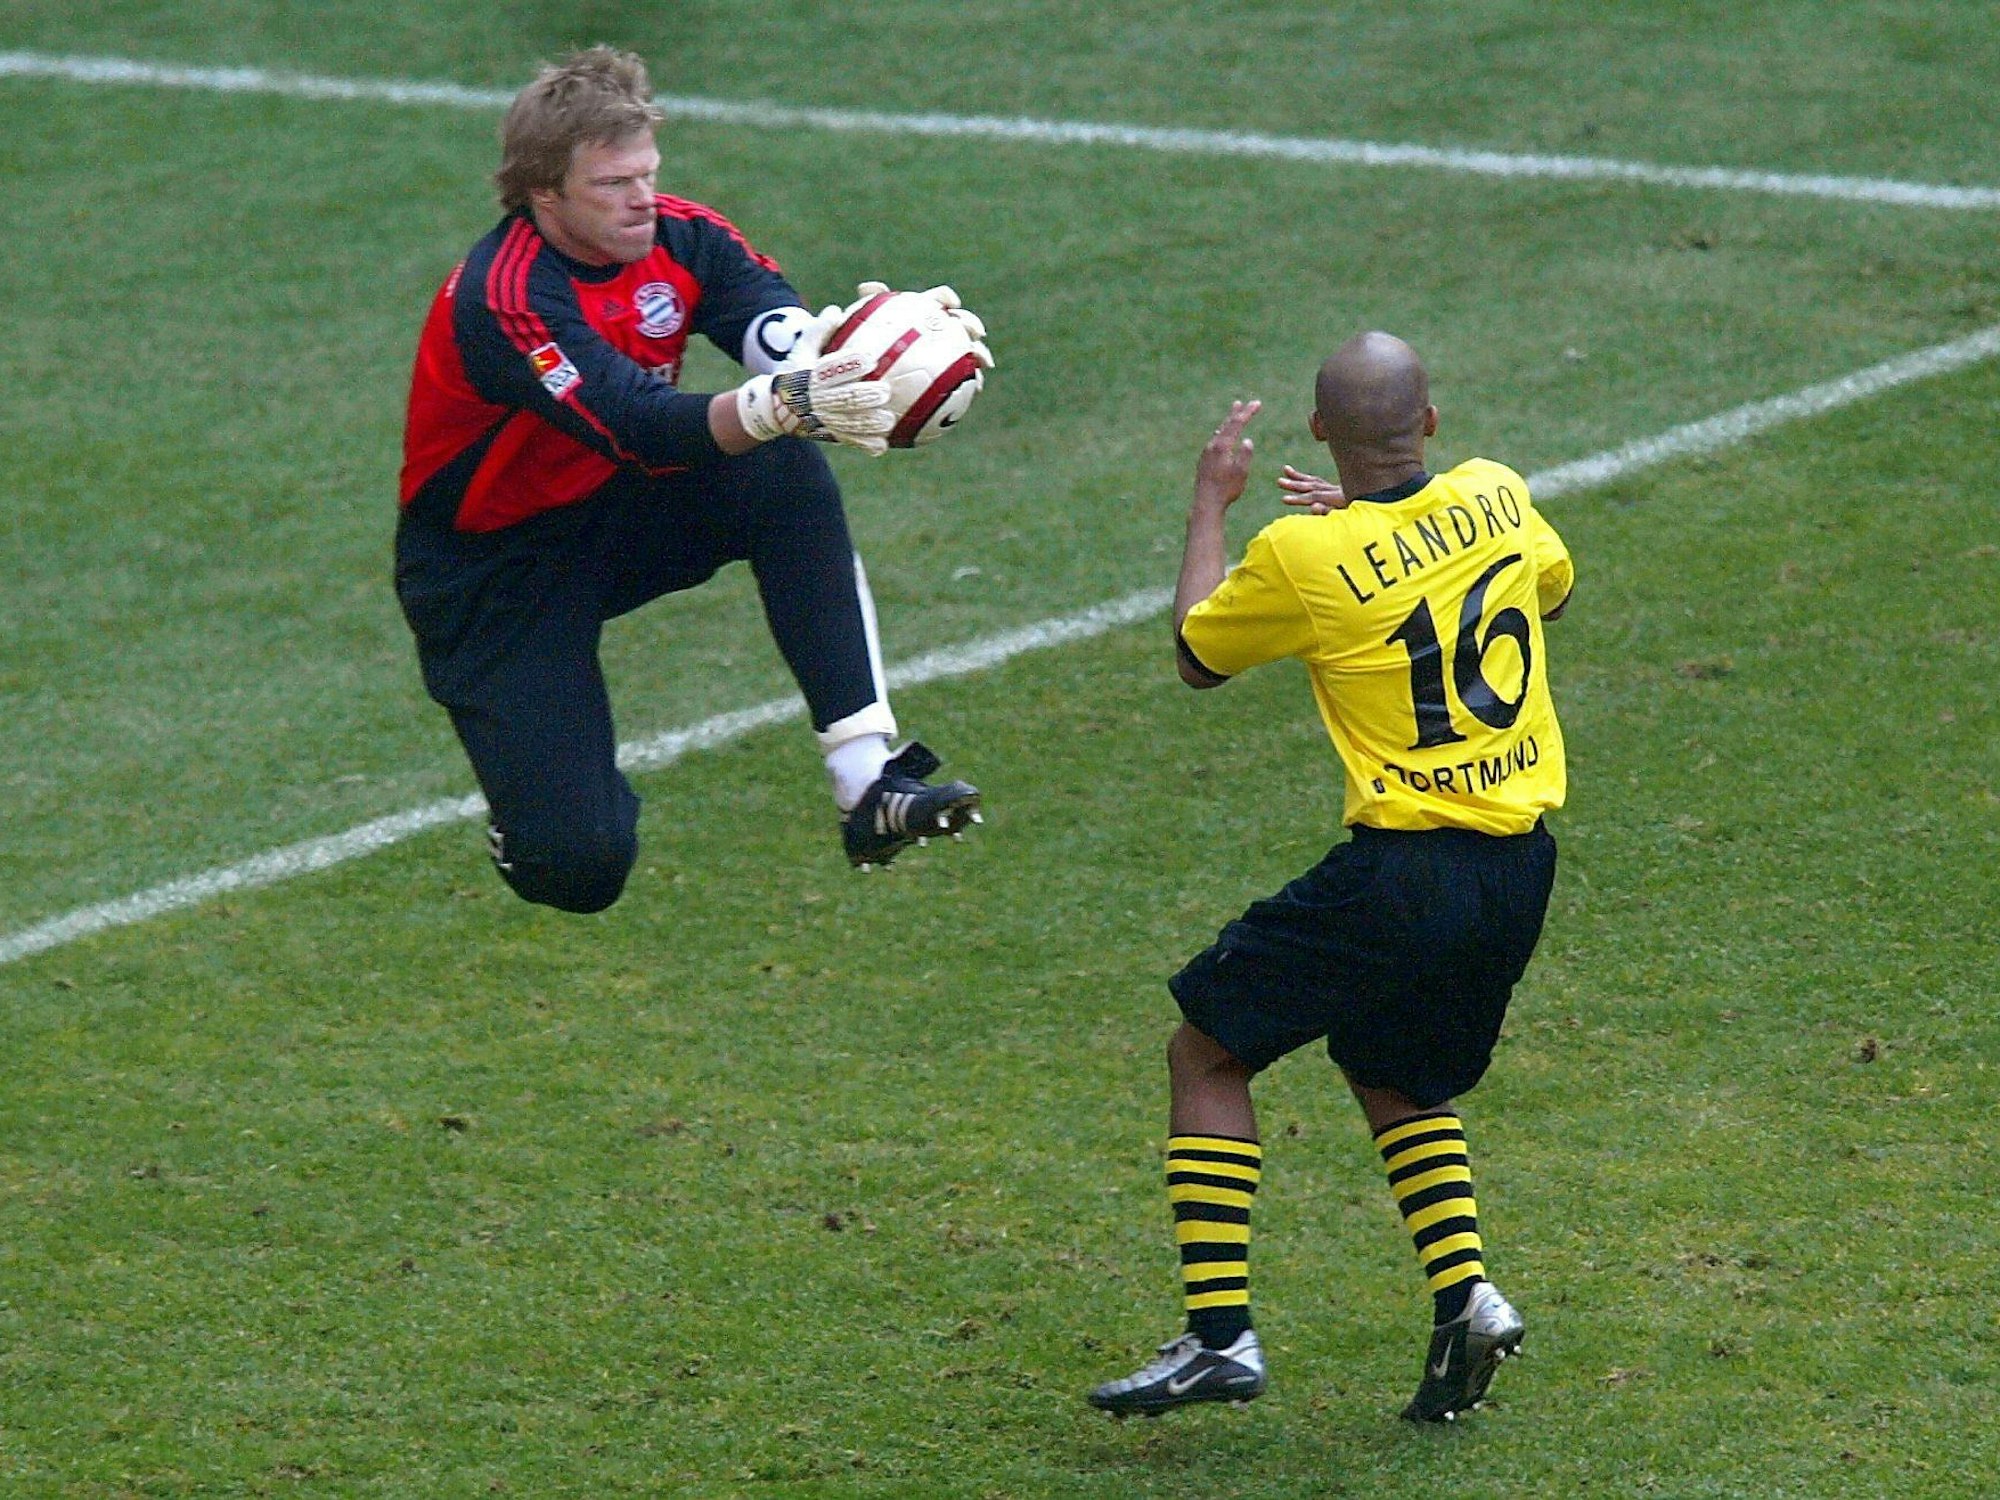 Oliver Kahn vom FC Bayern München fängt den Ball vor dem Dortmunder Leandro.